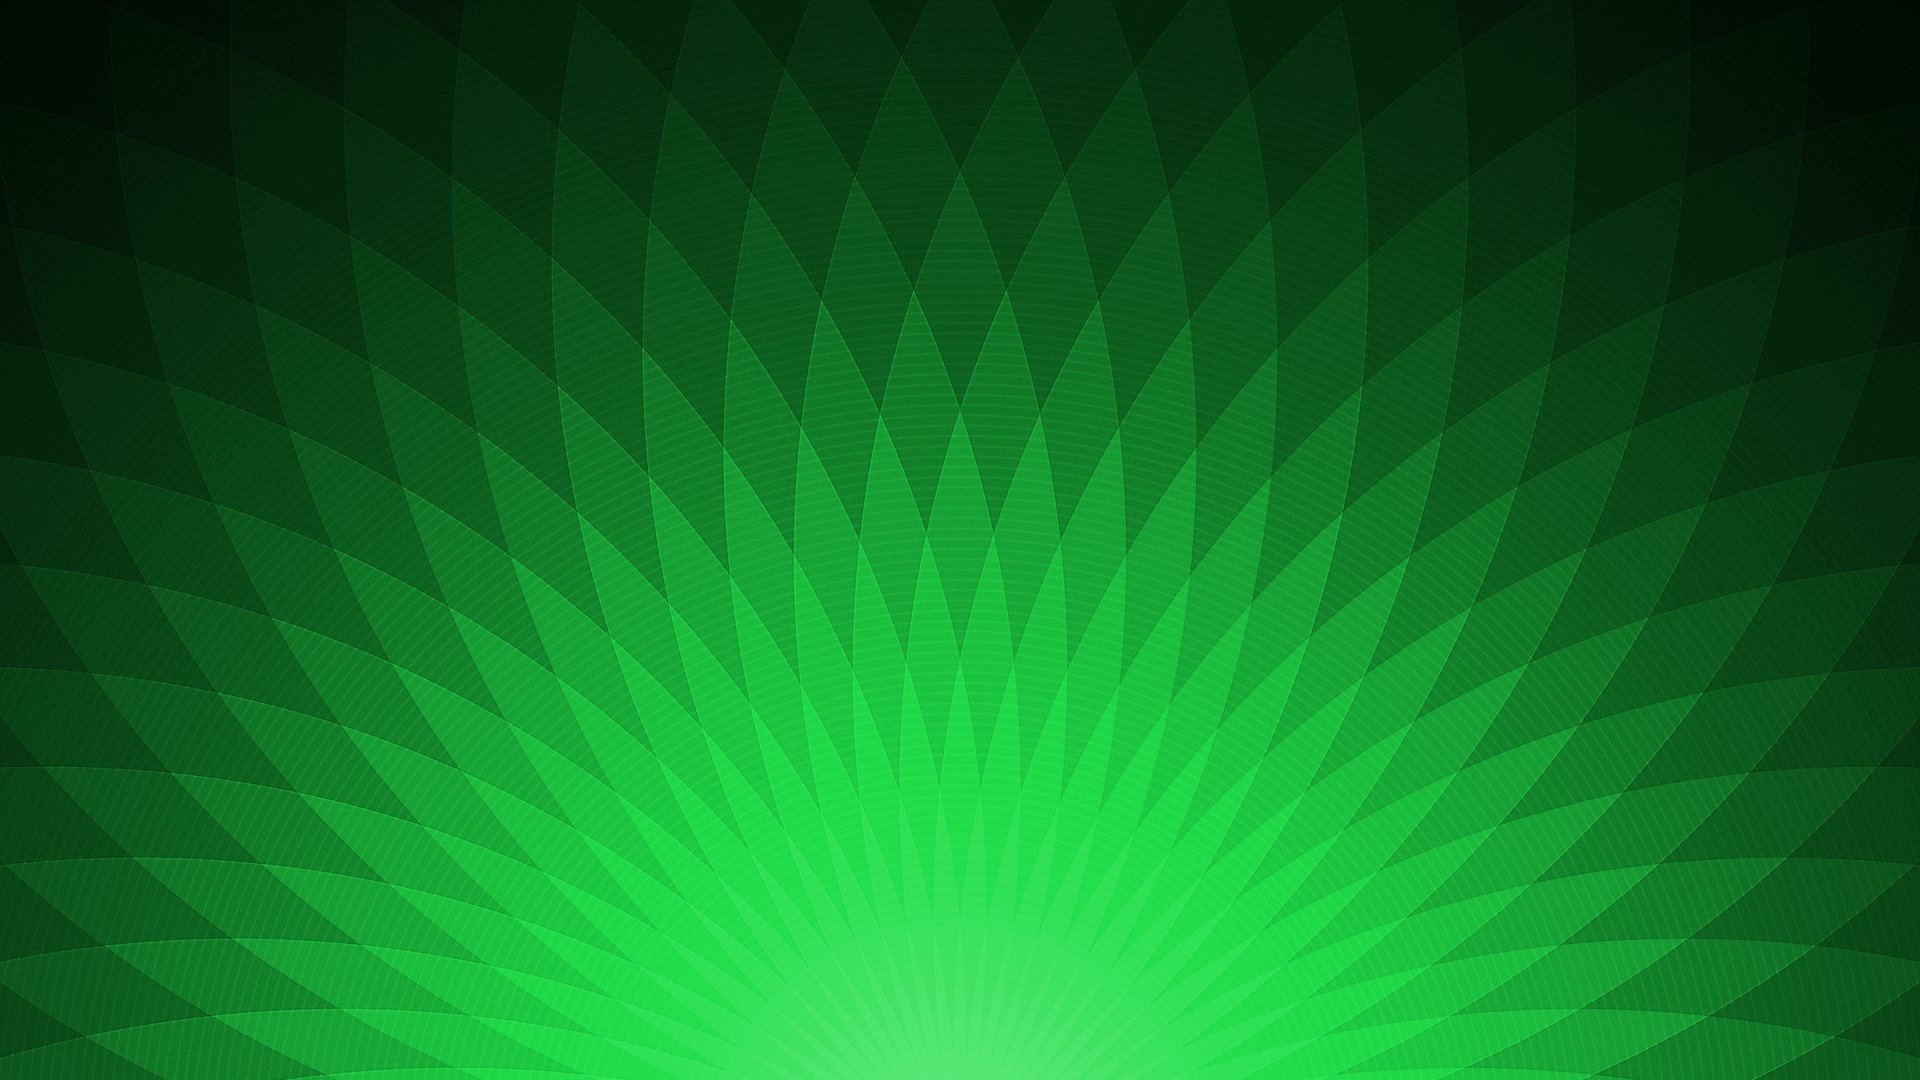 Green wallpapers 1920x1080 Full HD (1080p) desktop backgrounds